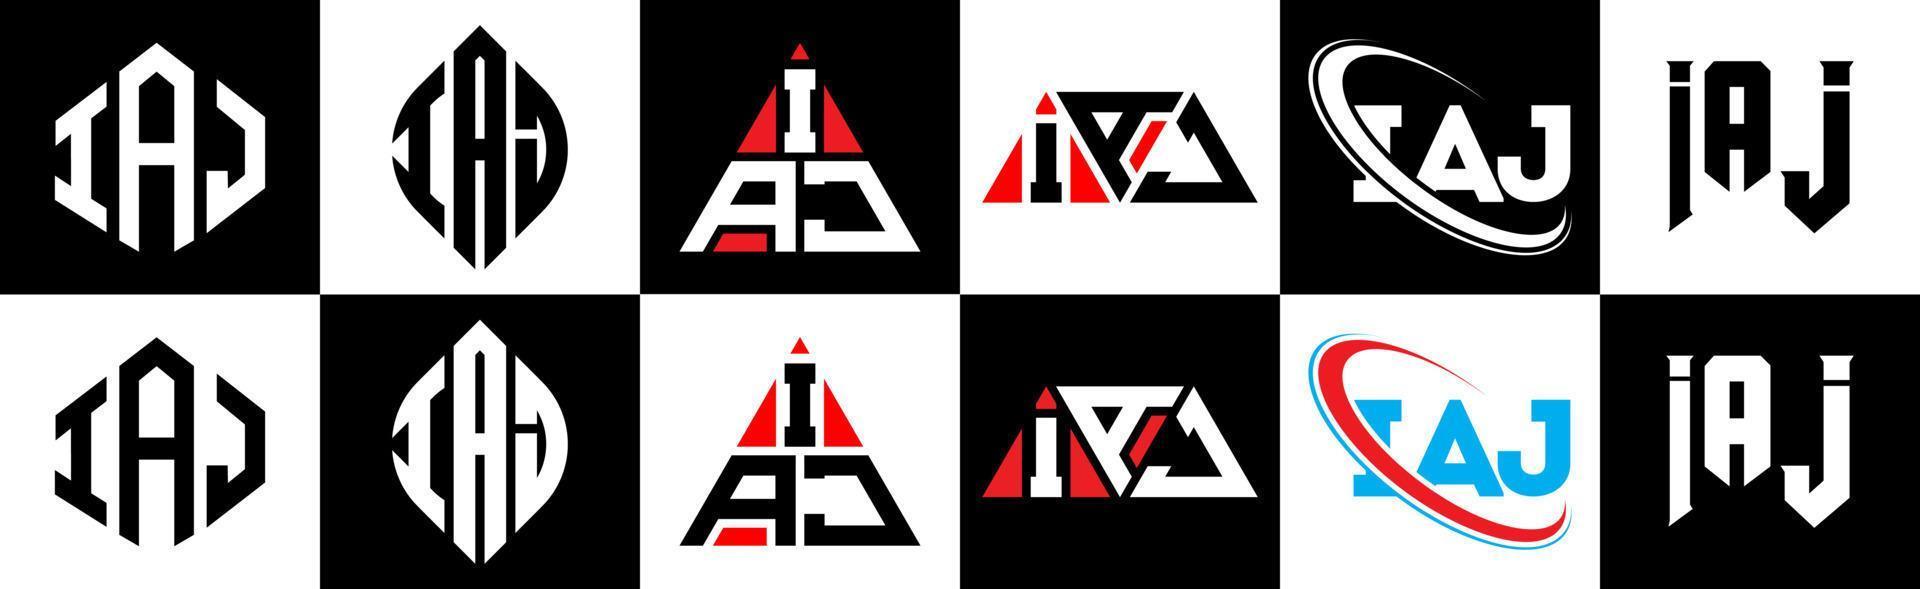 IAJ letter logo design in six style. IAJ polygon, circle, triangle, hexagon, flat and simple style with black and white color variation letter logo set in one artboard. IAJ minimalist and classic logo vector